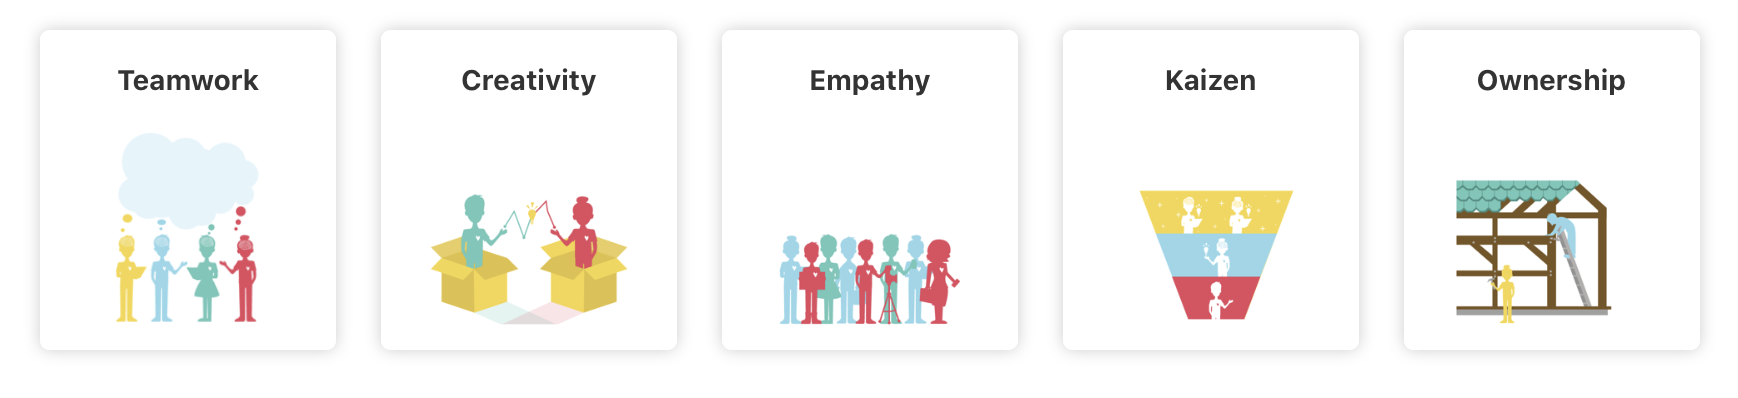 core values - creativity, empathy, kaizen, teamwork, ownership